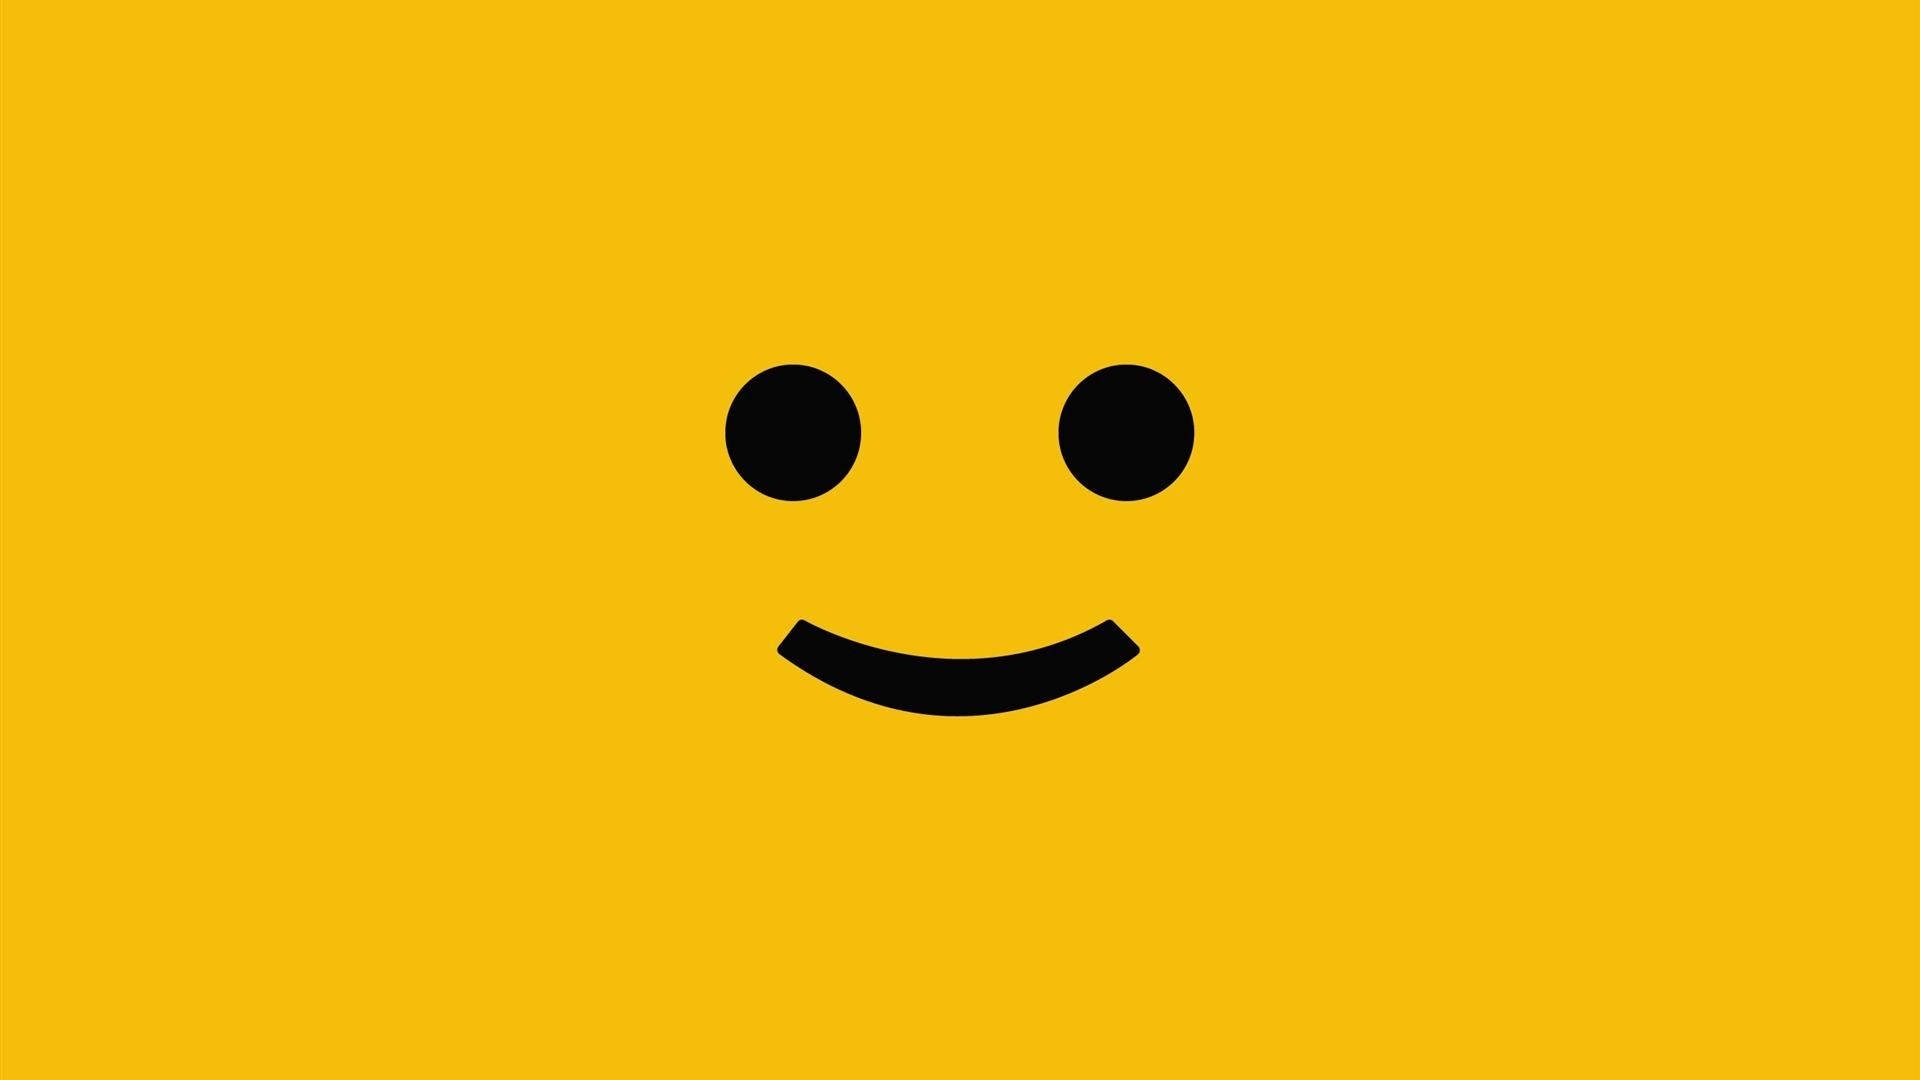 Ocher Yellow Happy Smiley Wallpaper